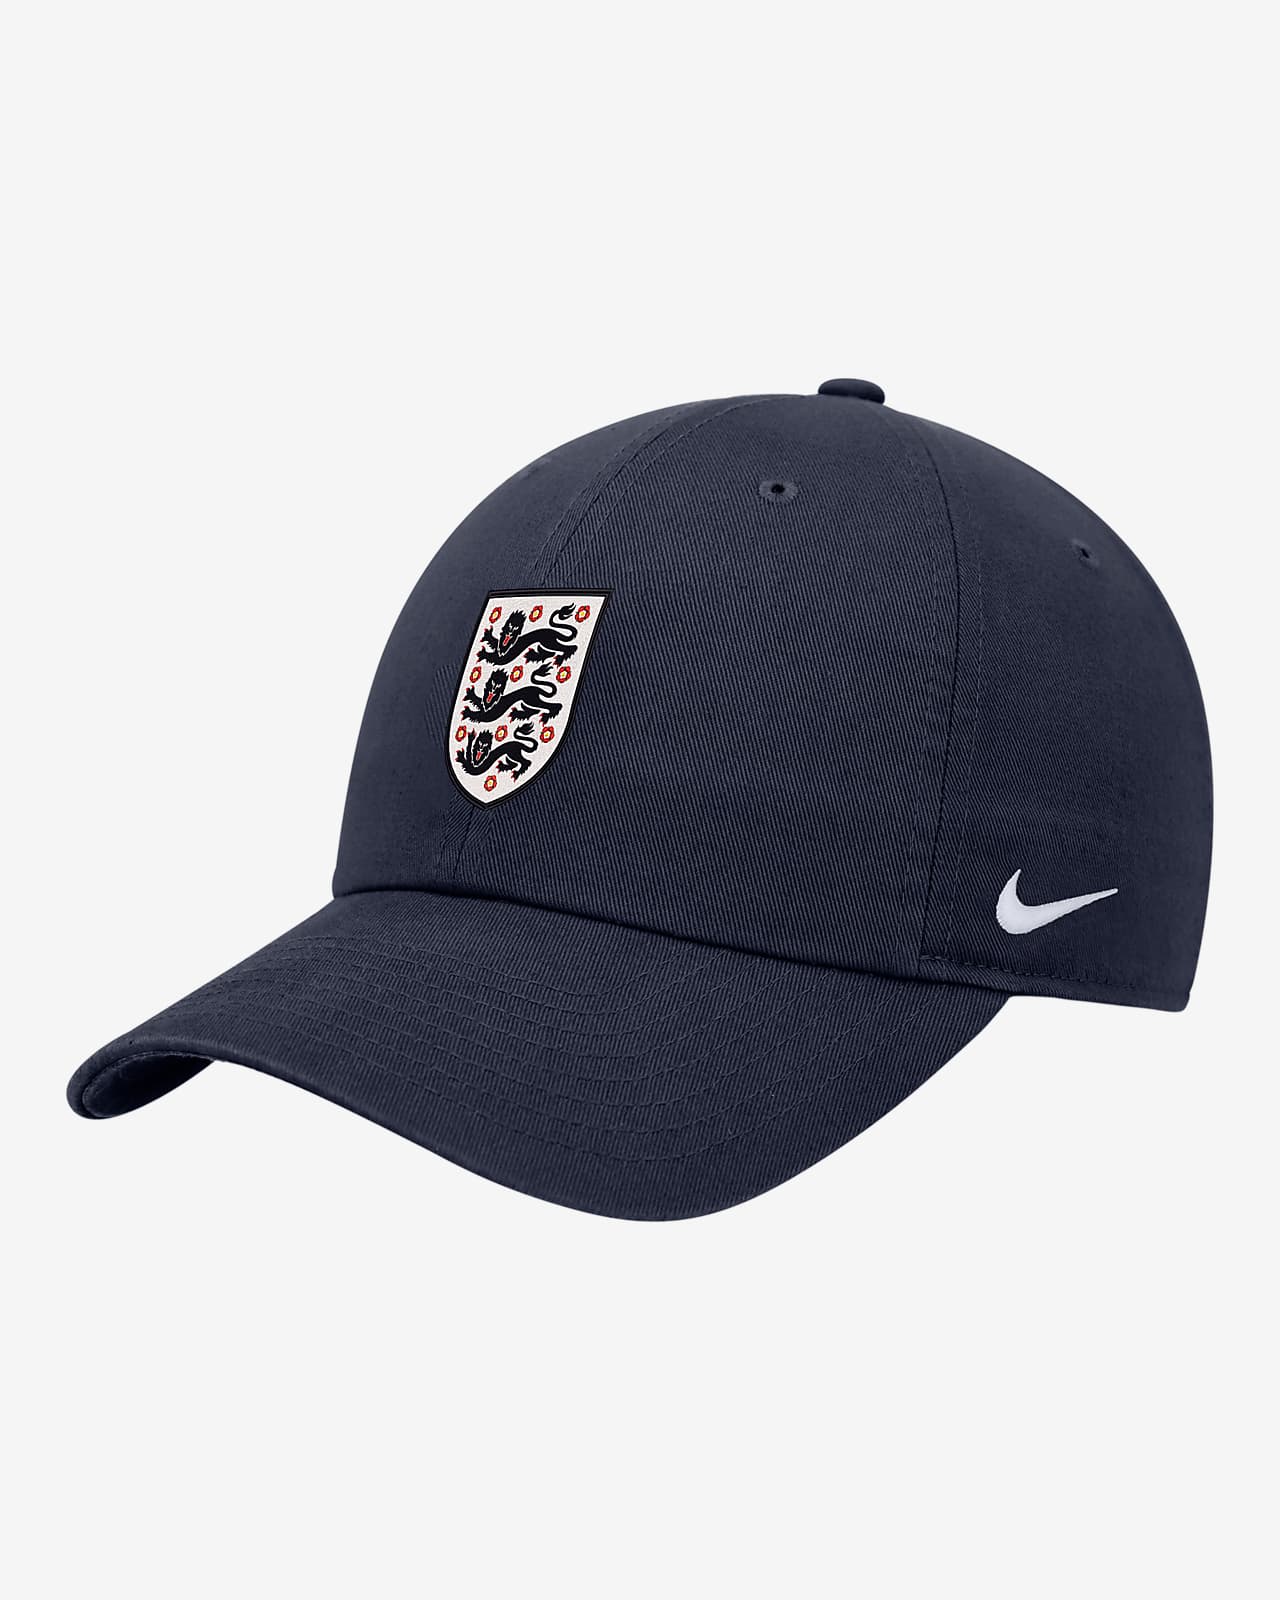 England Club Nike Soccer Cap